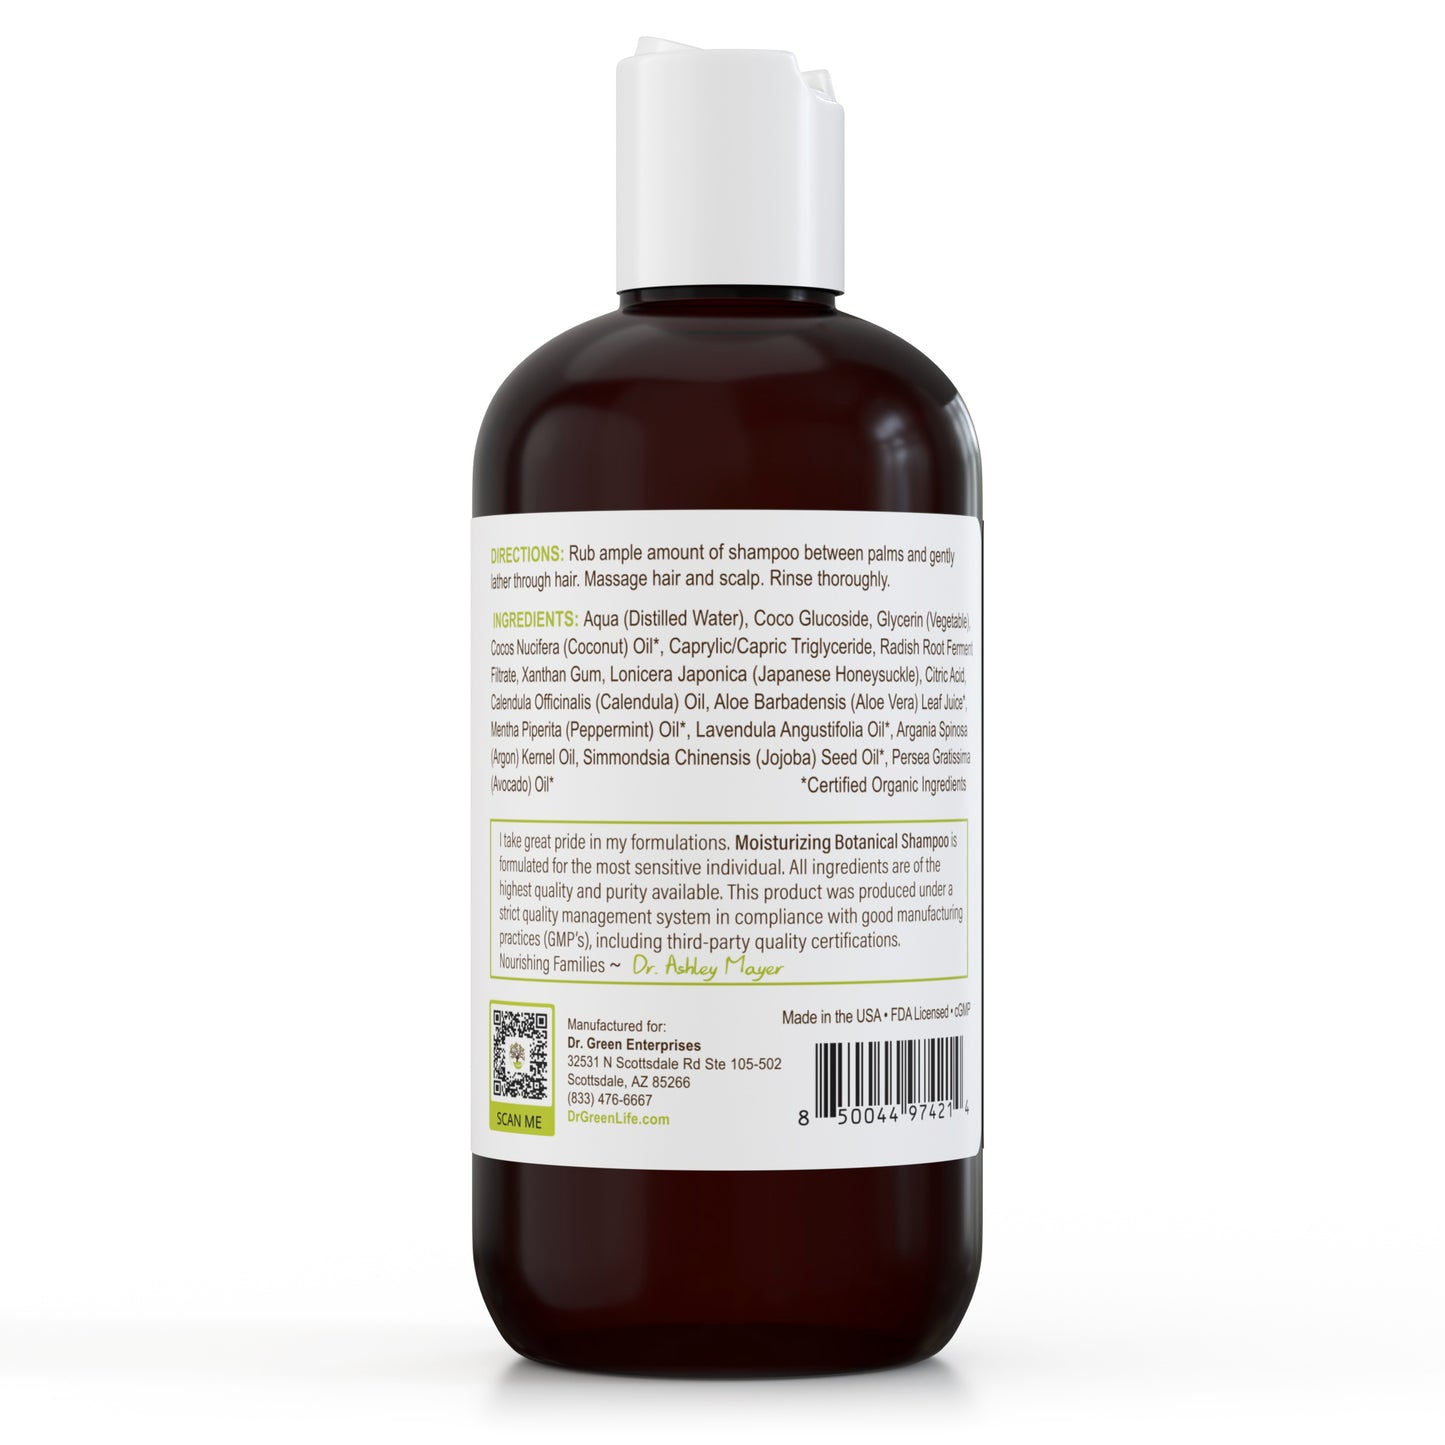 Moisturizing Botanical Shampoo (For All Hair Types) - 8 oz.